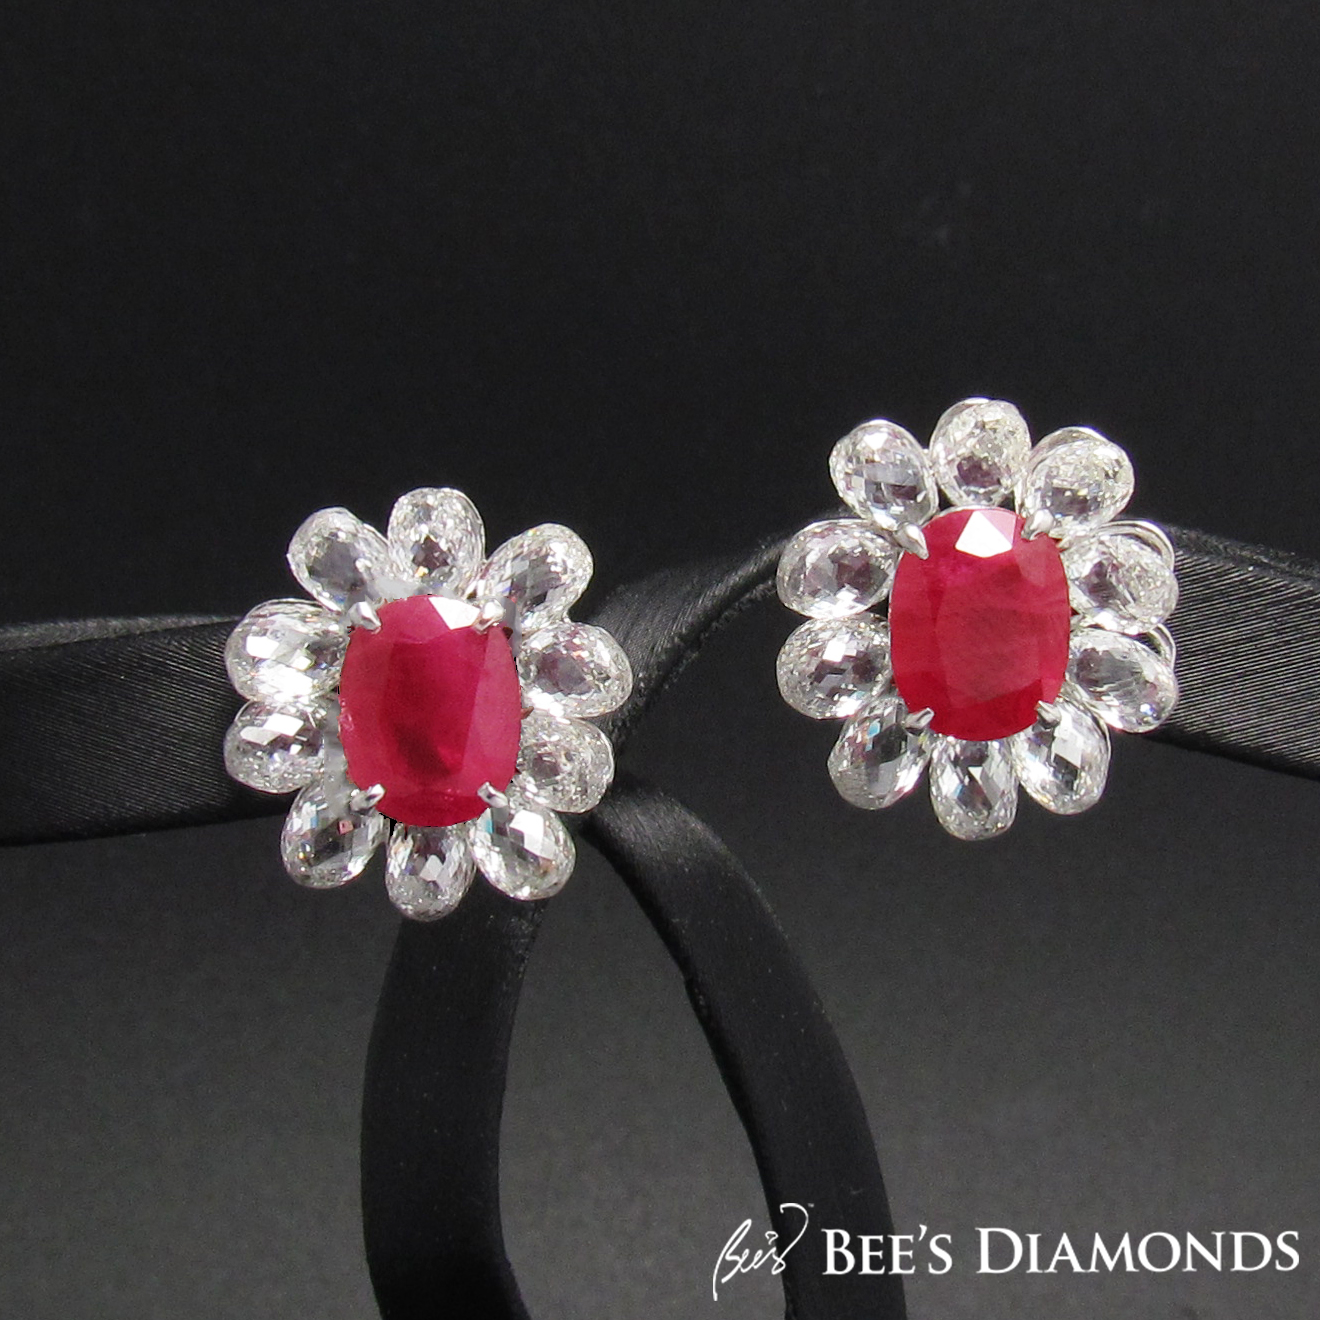 Burmese rubies earrings with rose cut diamonds | Bee's Diamonds